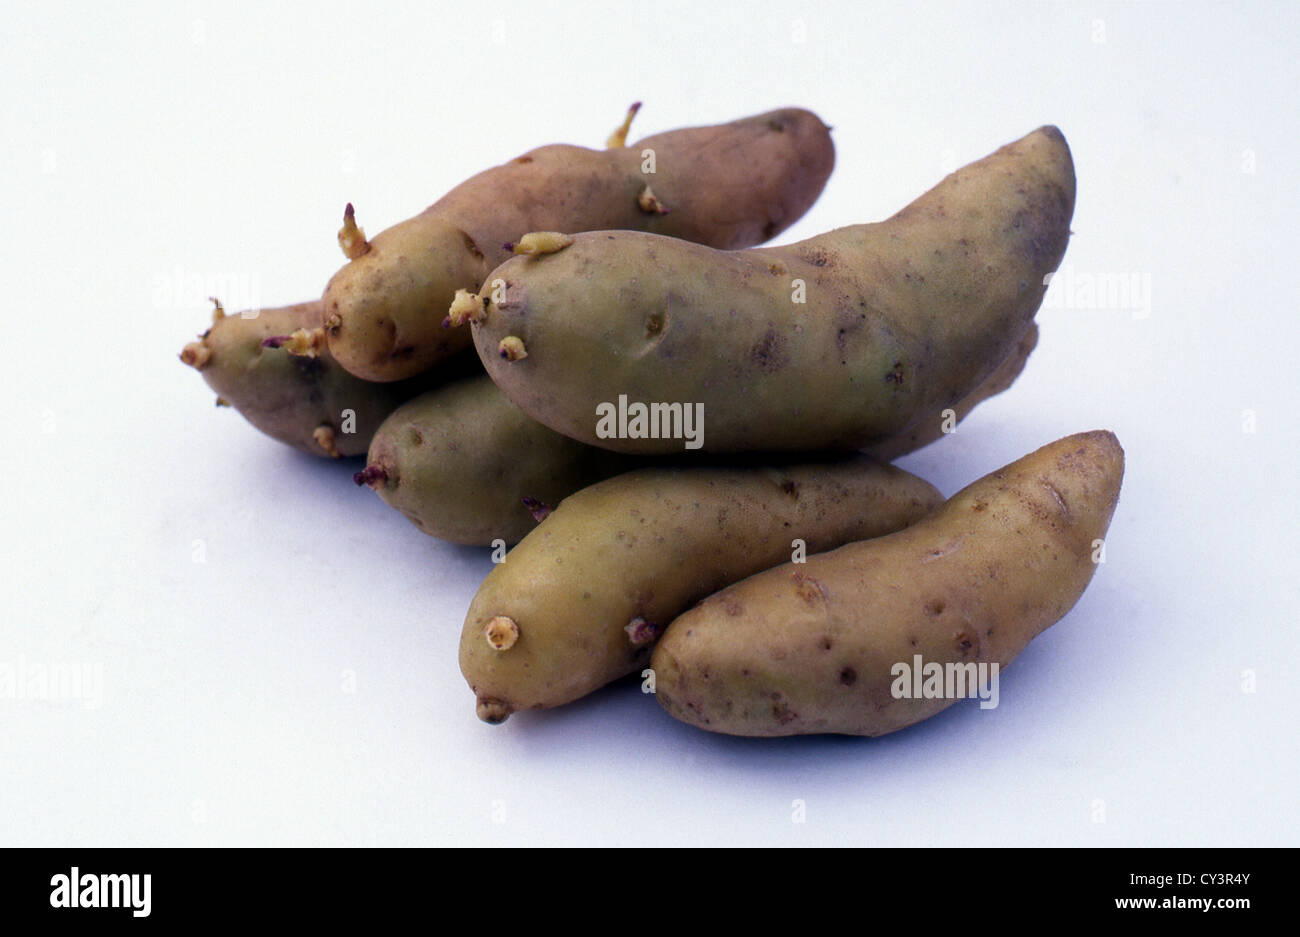 Sample of six second early salad potato (Solanum tuberosum) cultivar 'Ratte' (synonyms: 'Asparge', 'Cornichon') tubers Stock Photo